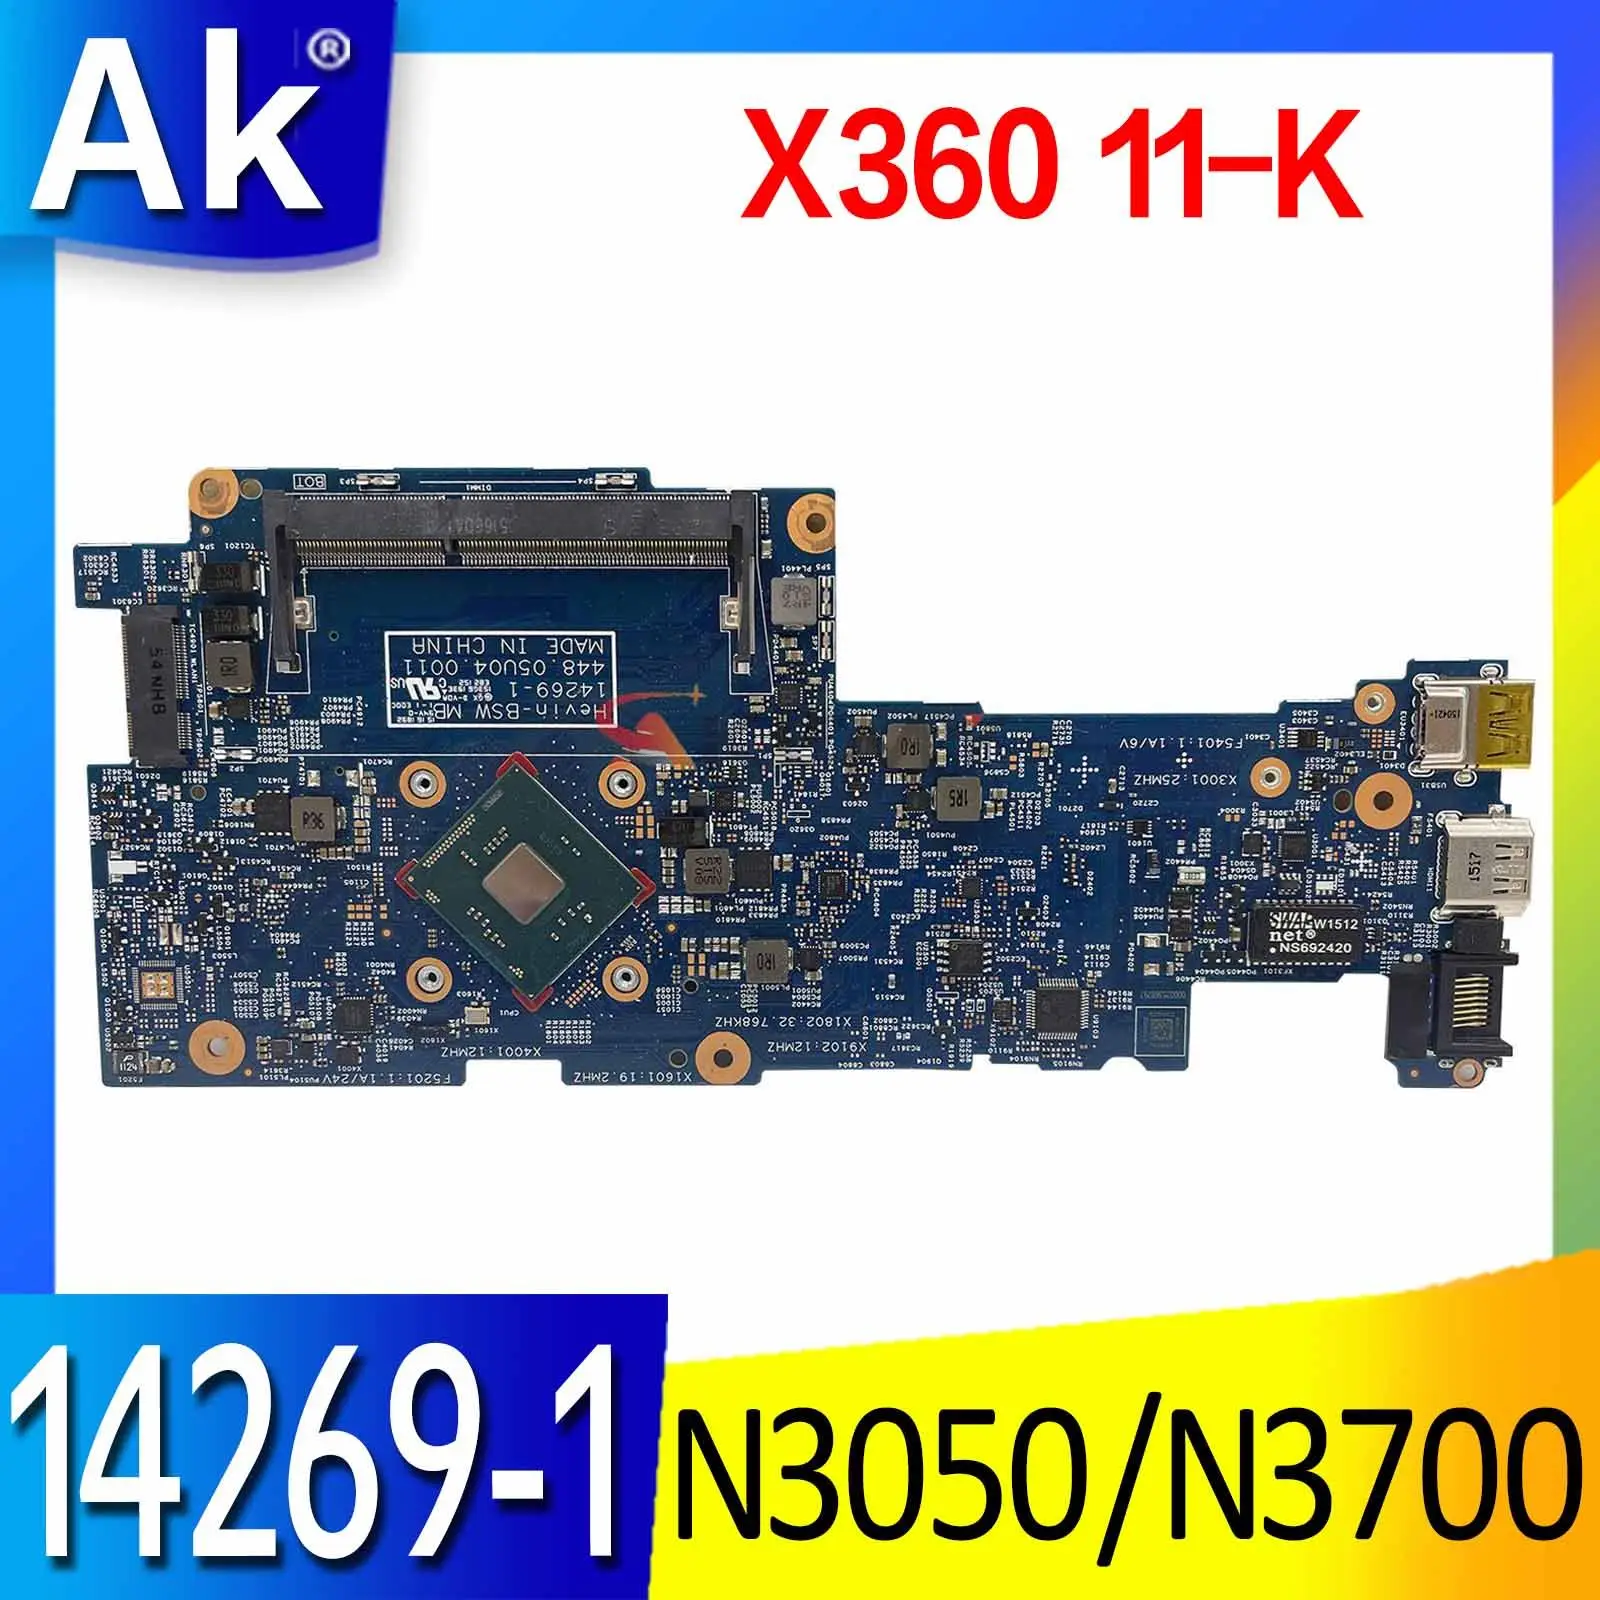 

Mainboard For HP Pavilion X360 11-K Celeron N3050 N3700 CPU Laptop motherboard mainboard 14269-1 motherboard